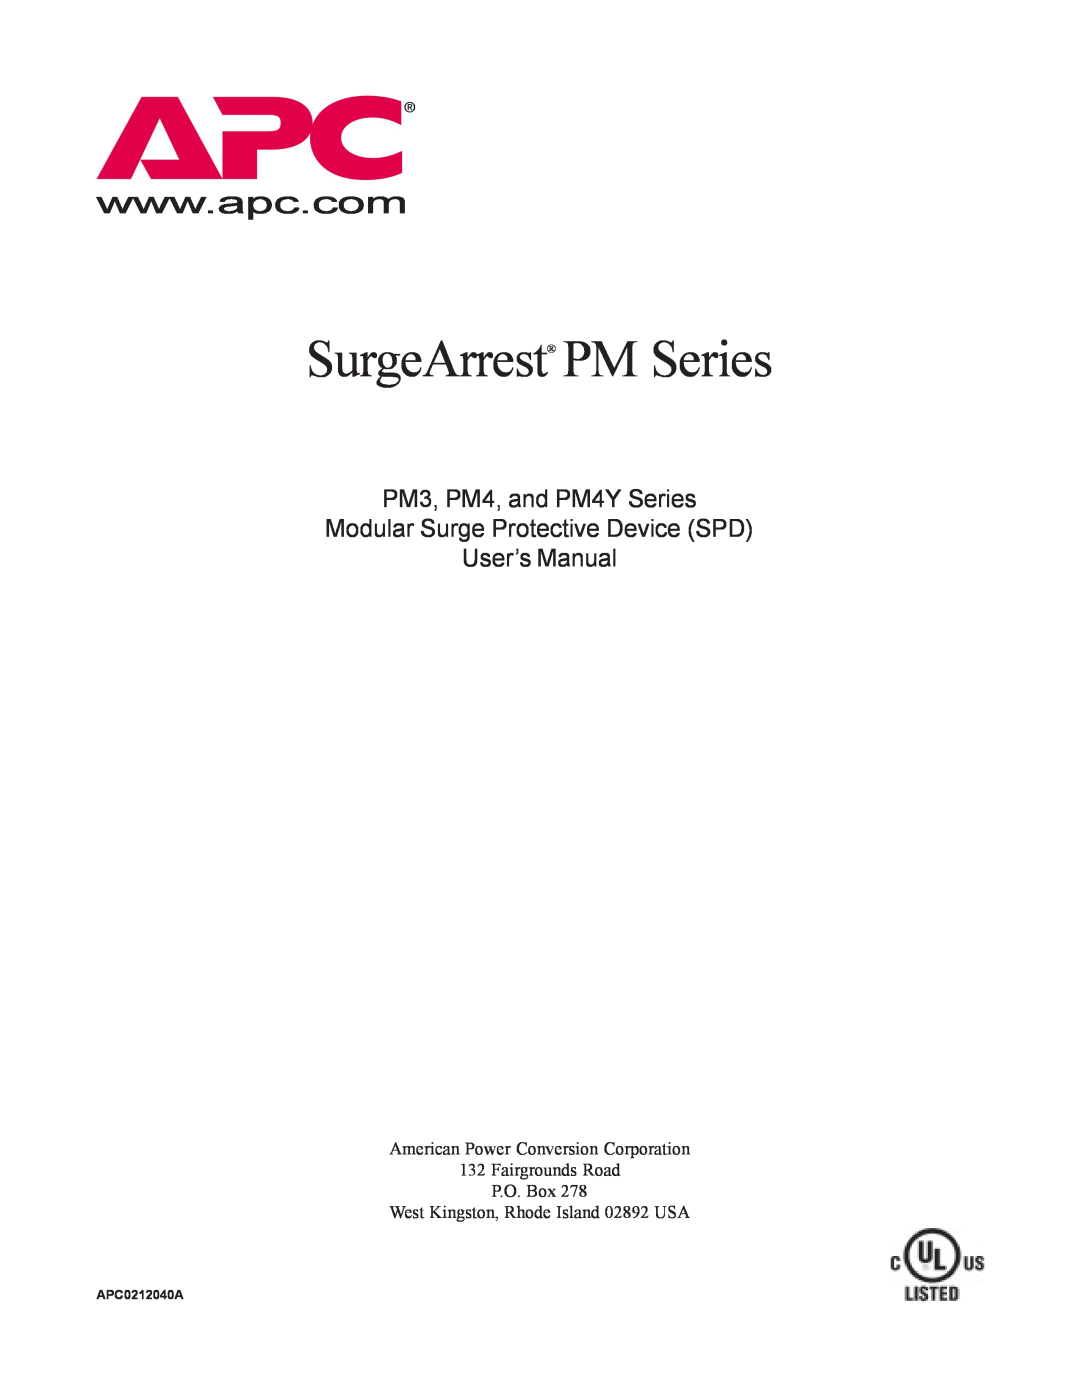 American Power Conversion PM4Y, PM3 user manual SurgeArrest PM Series, User’s Manual, APC0212040A 